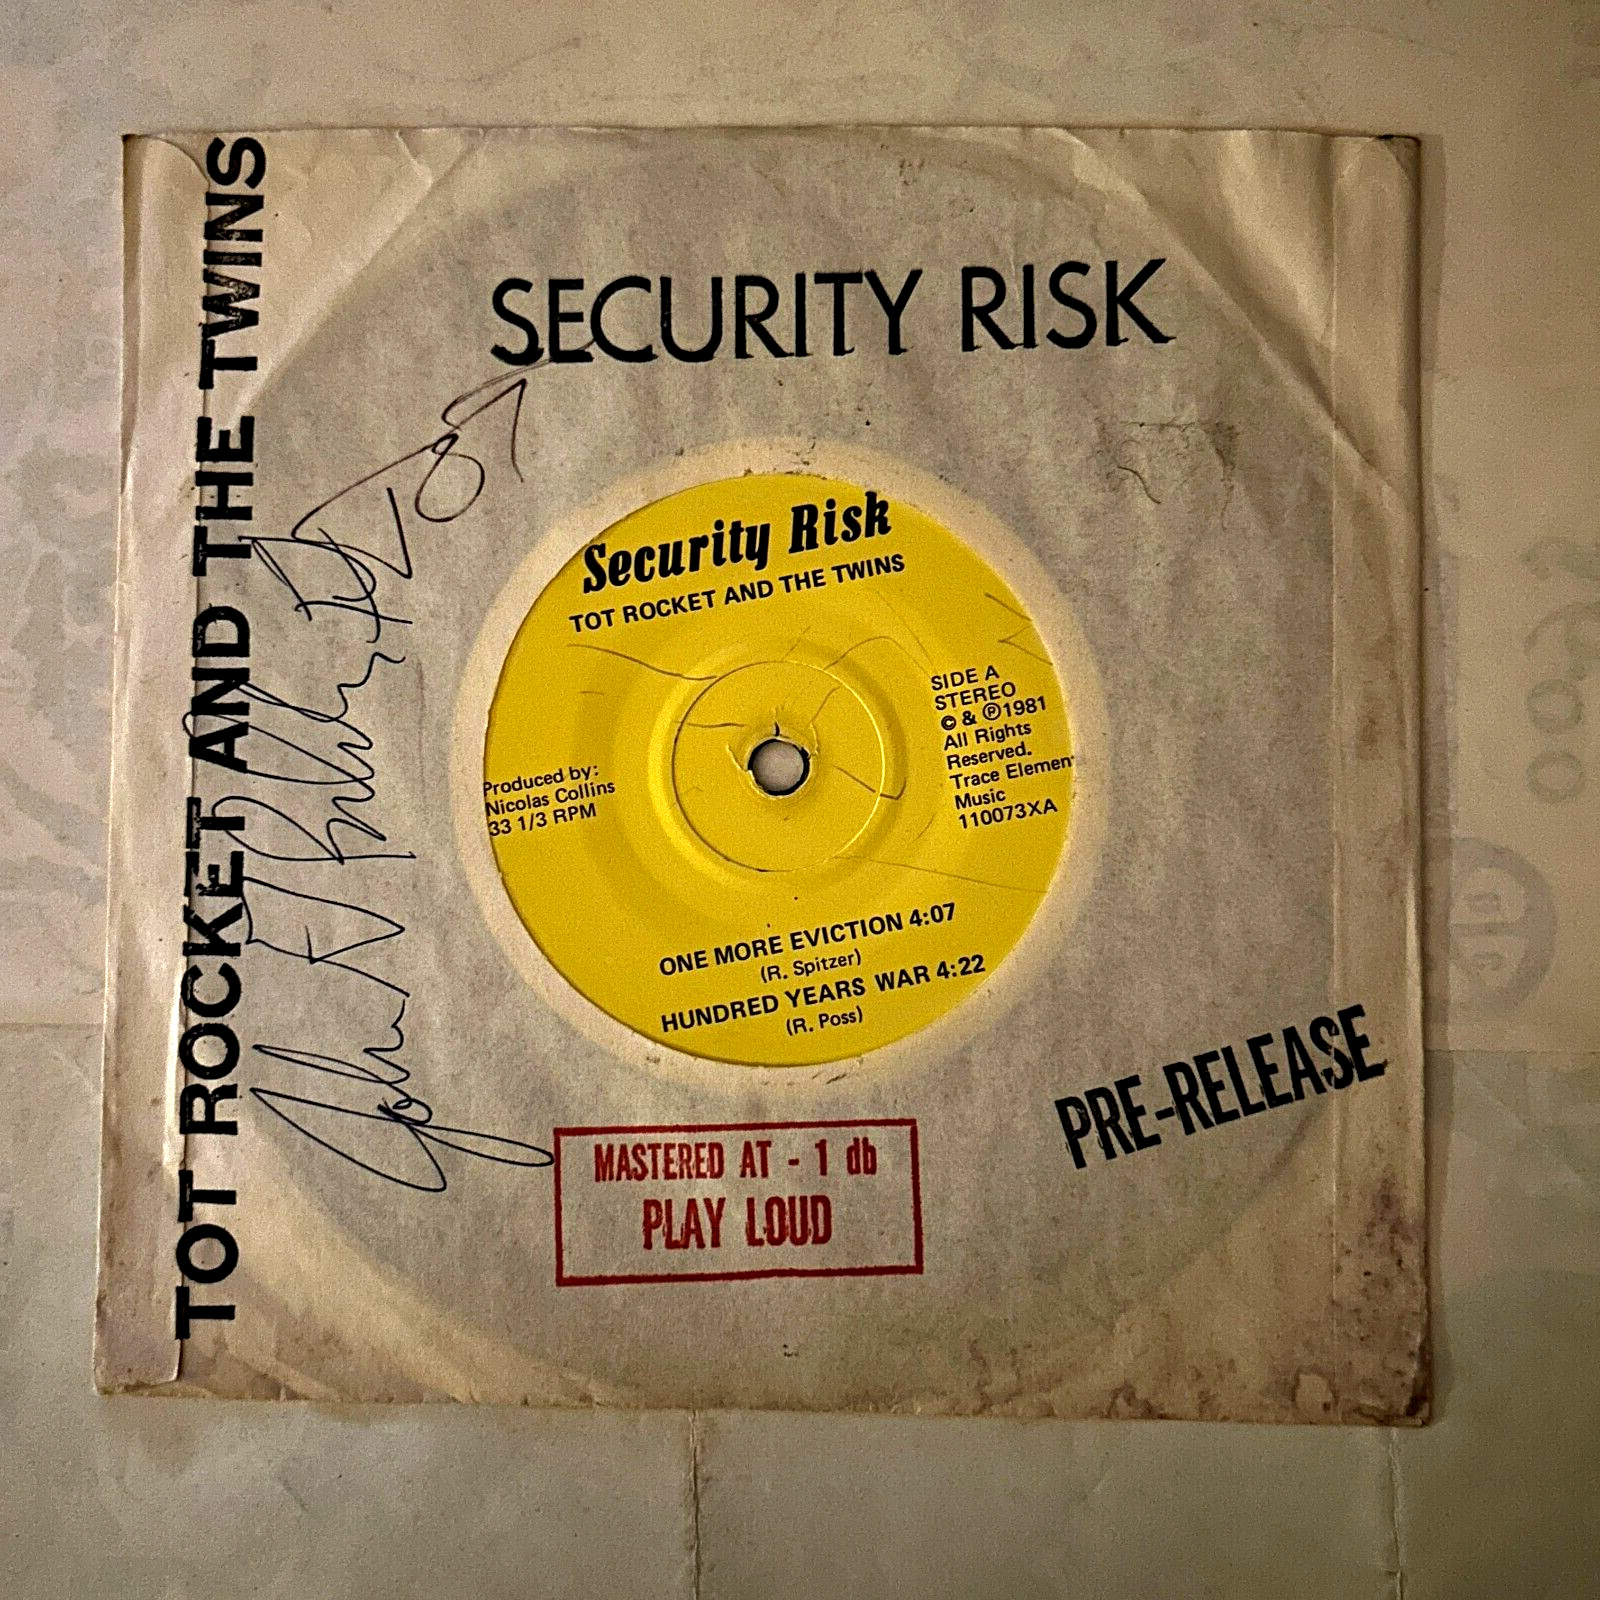 TOT ROCKET AND THE TWINS - Security Risk 7"  - original pressing punk KBD